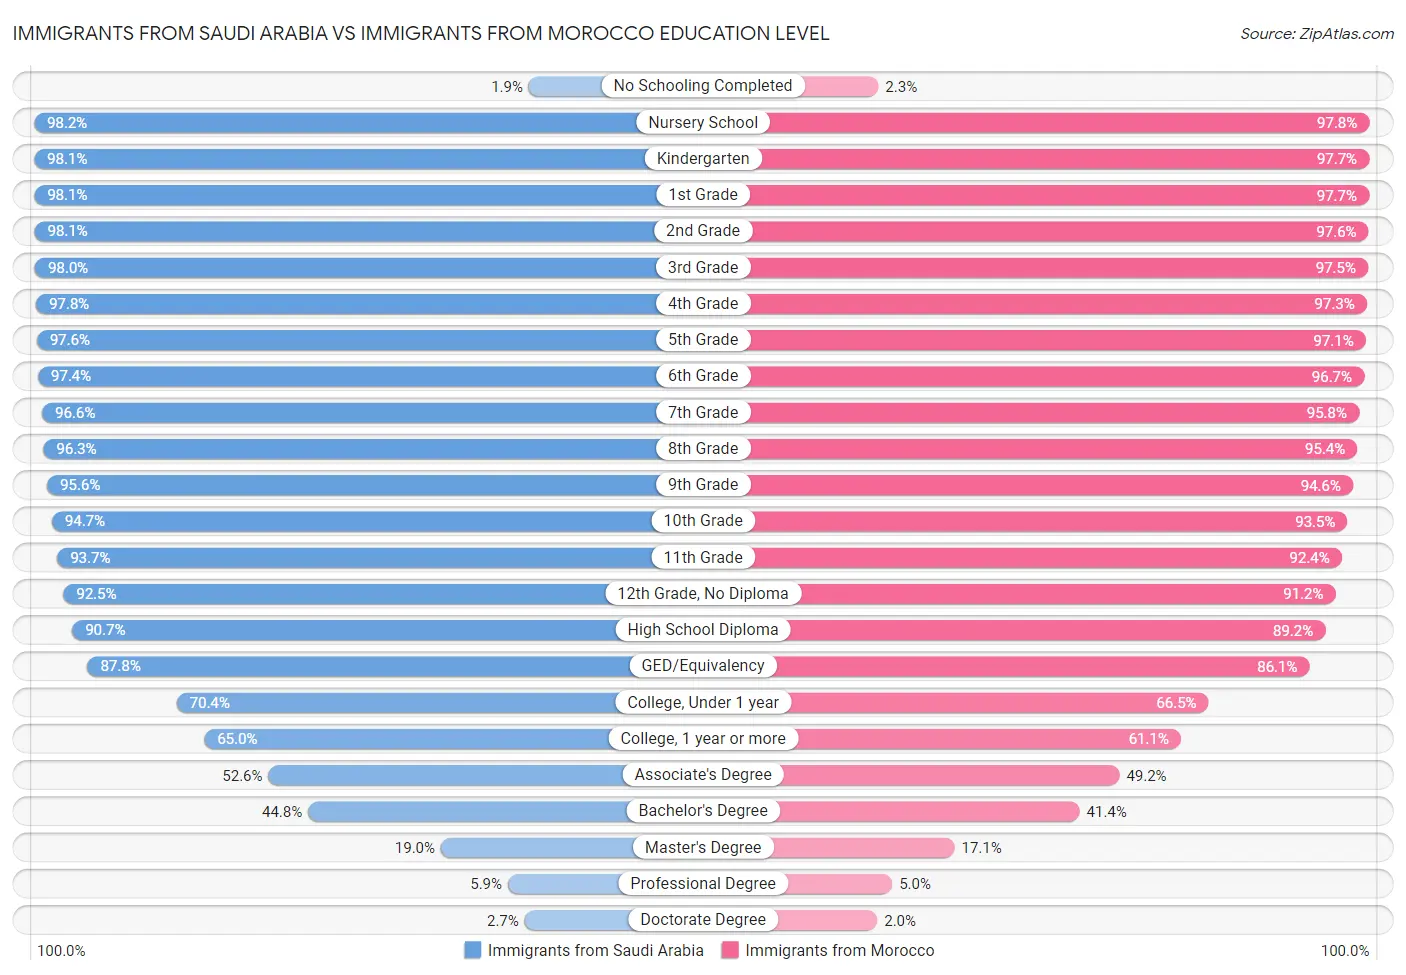 Immigrants from Saudi Arabia vs Immigrants from Morocco Education Level